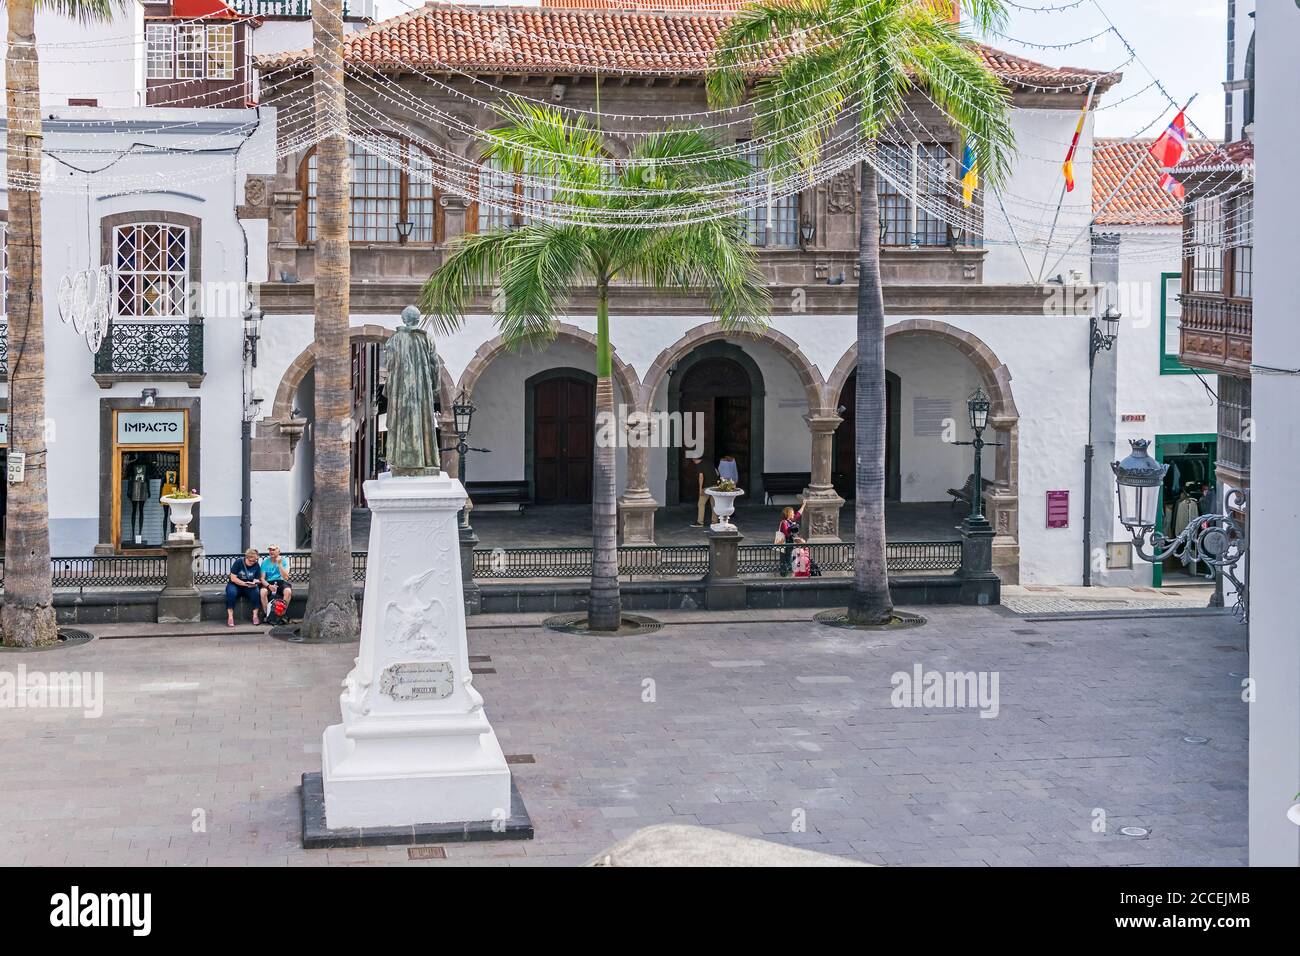 Santa Cruz de la Palma, Spain - November 12, 2019: Plaza de Espana in historic city centre with the Ayuntamiento the most important civil building on Stock Photo